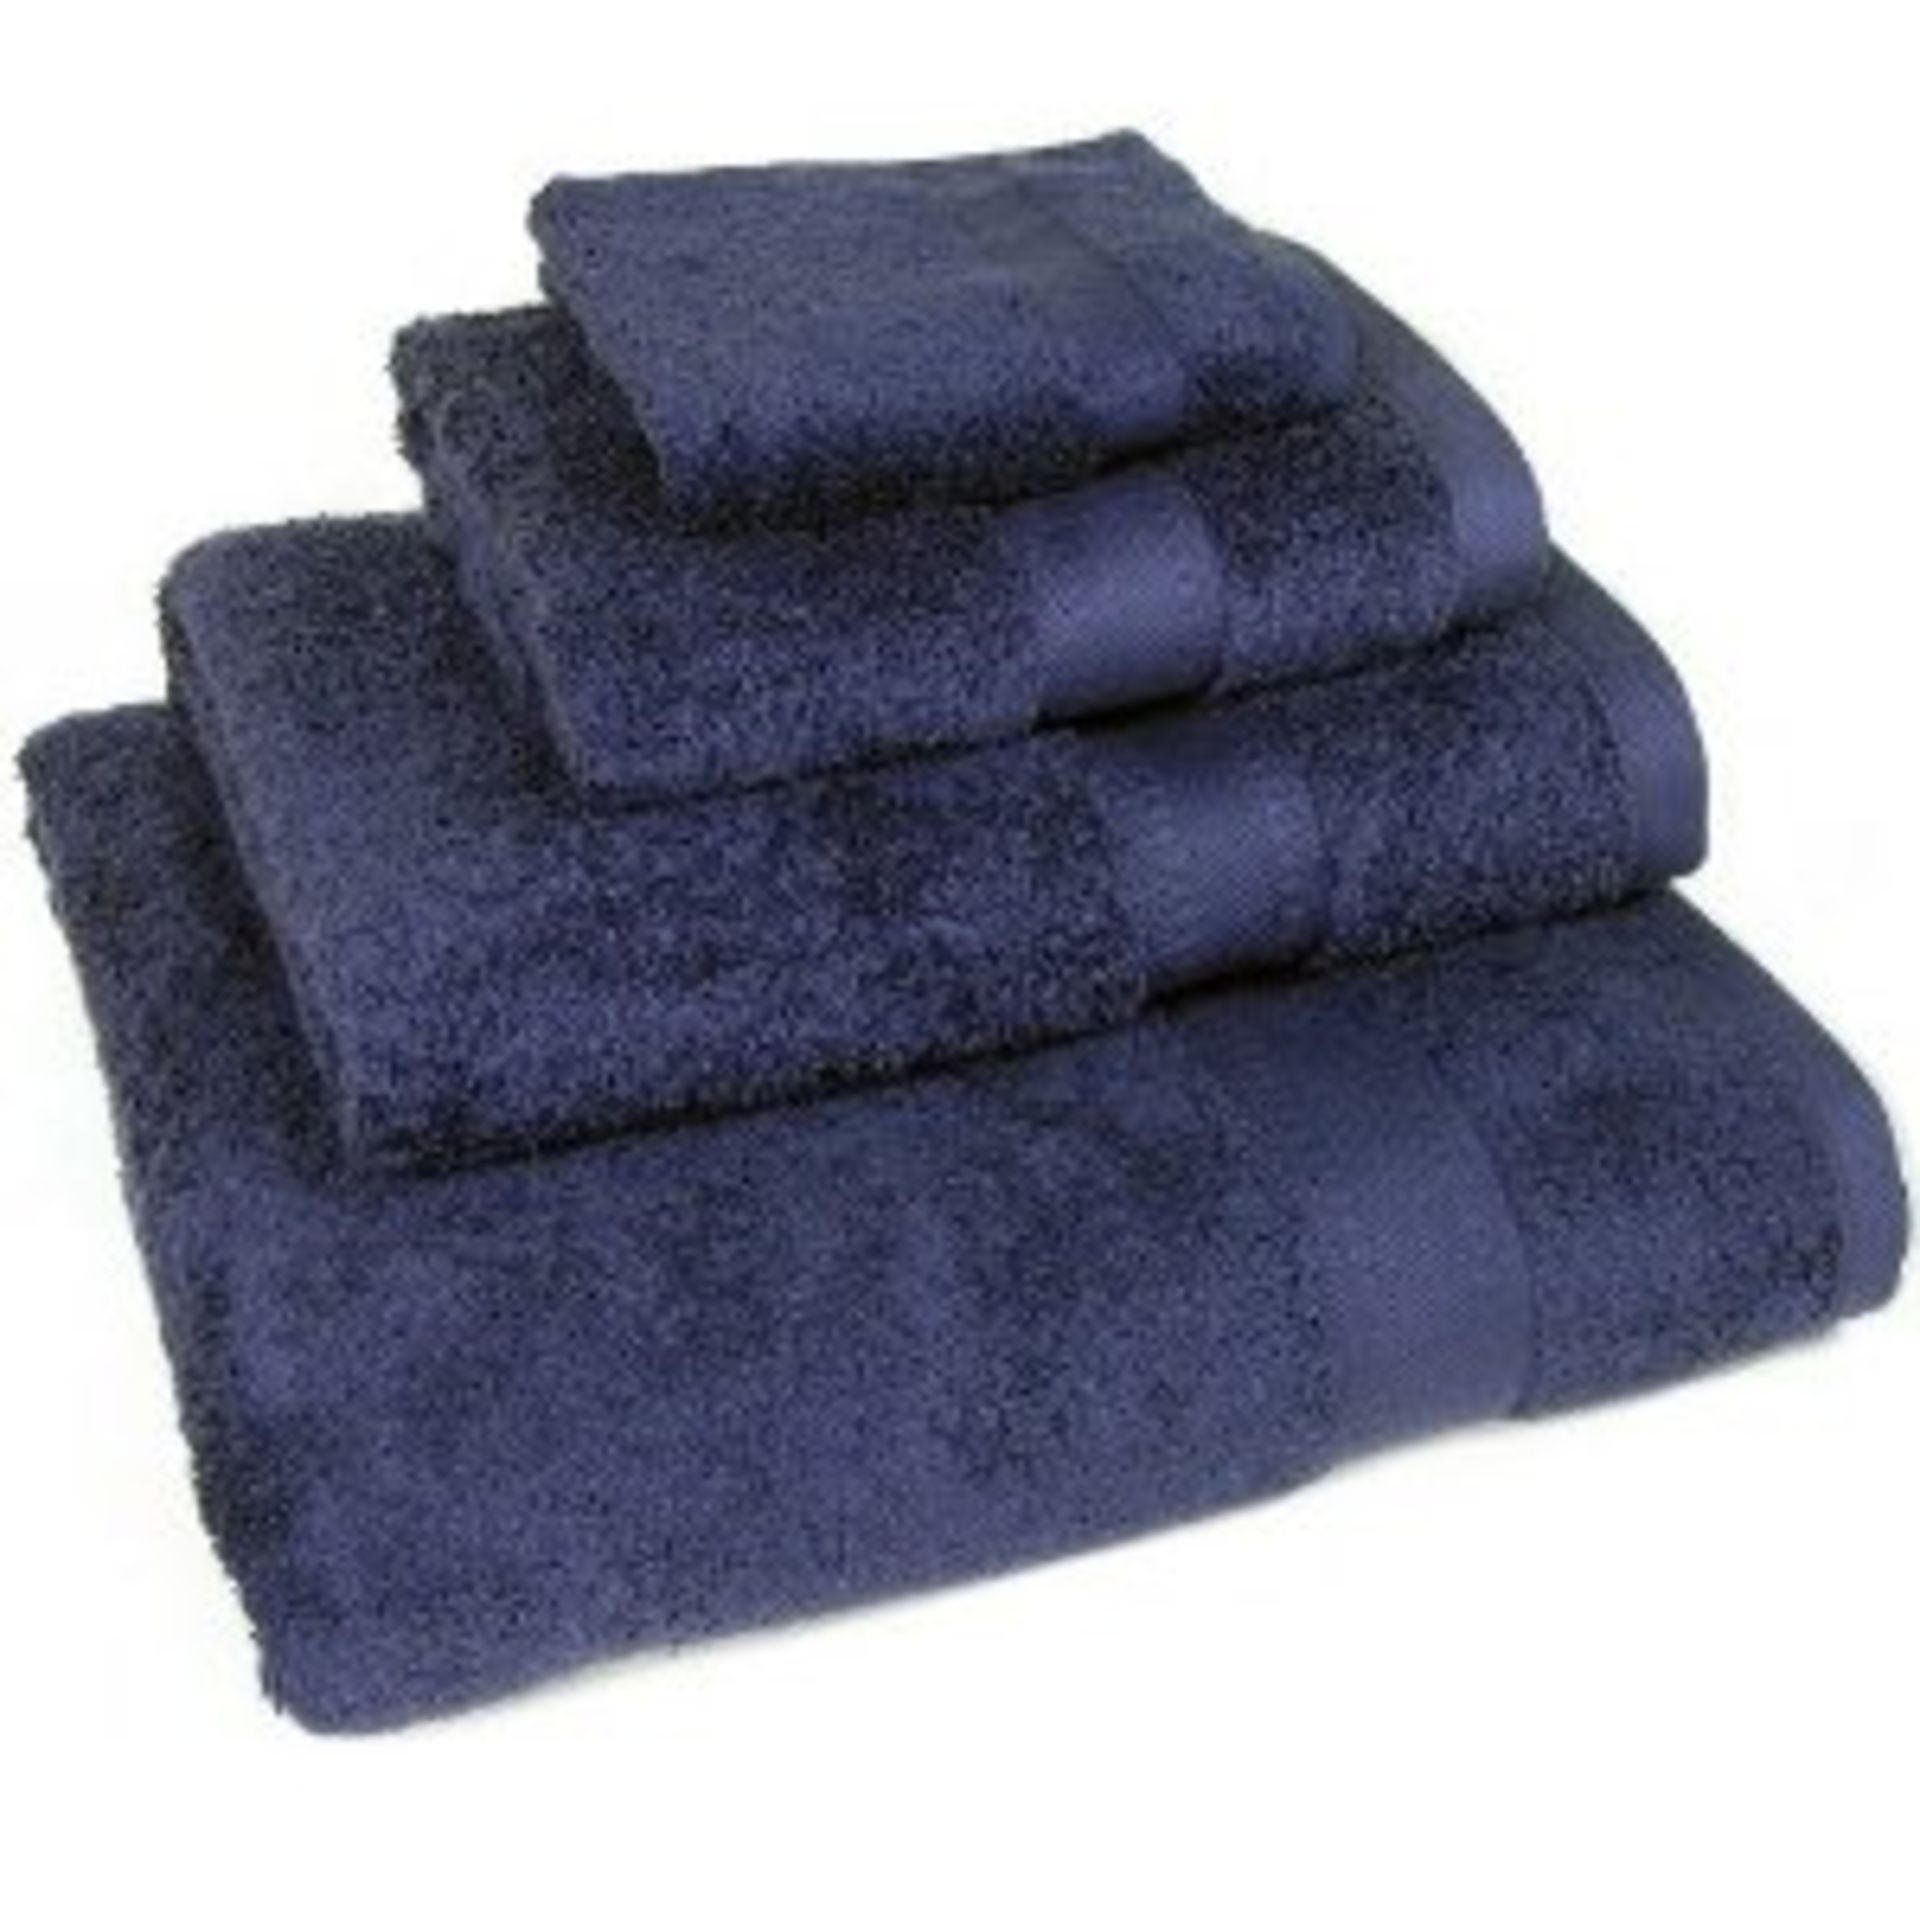 V *TRADE QTY* Brand New Blue Six Piece Towel Bale Set Includes 2 Bath Towels 2 Hand Towels and 2